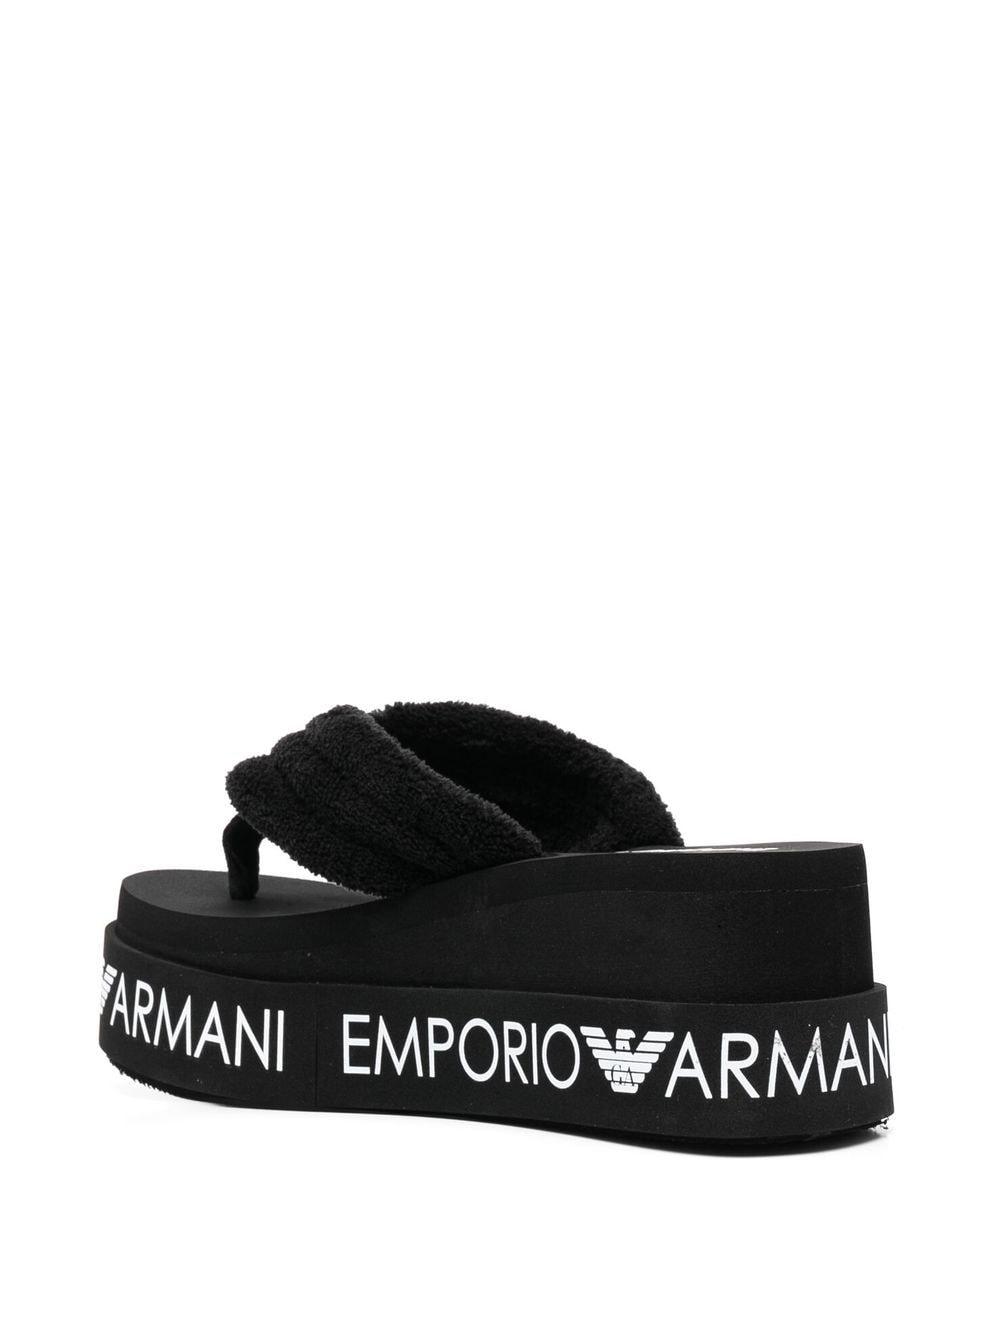 Emporio Armani Sandals Black | Lyst